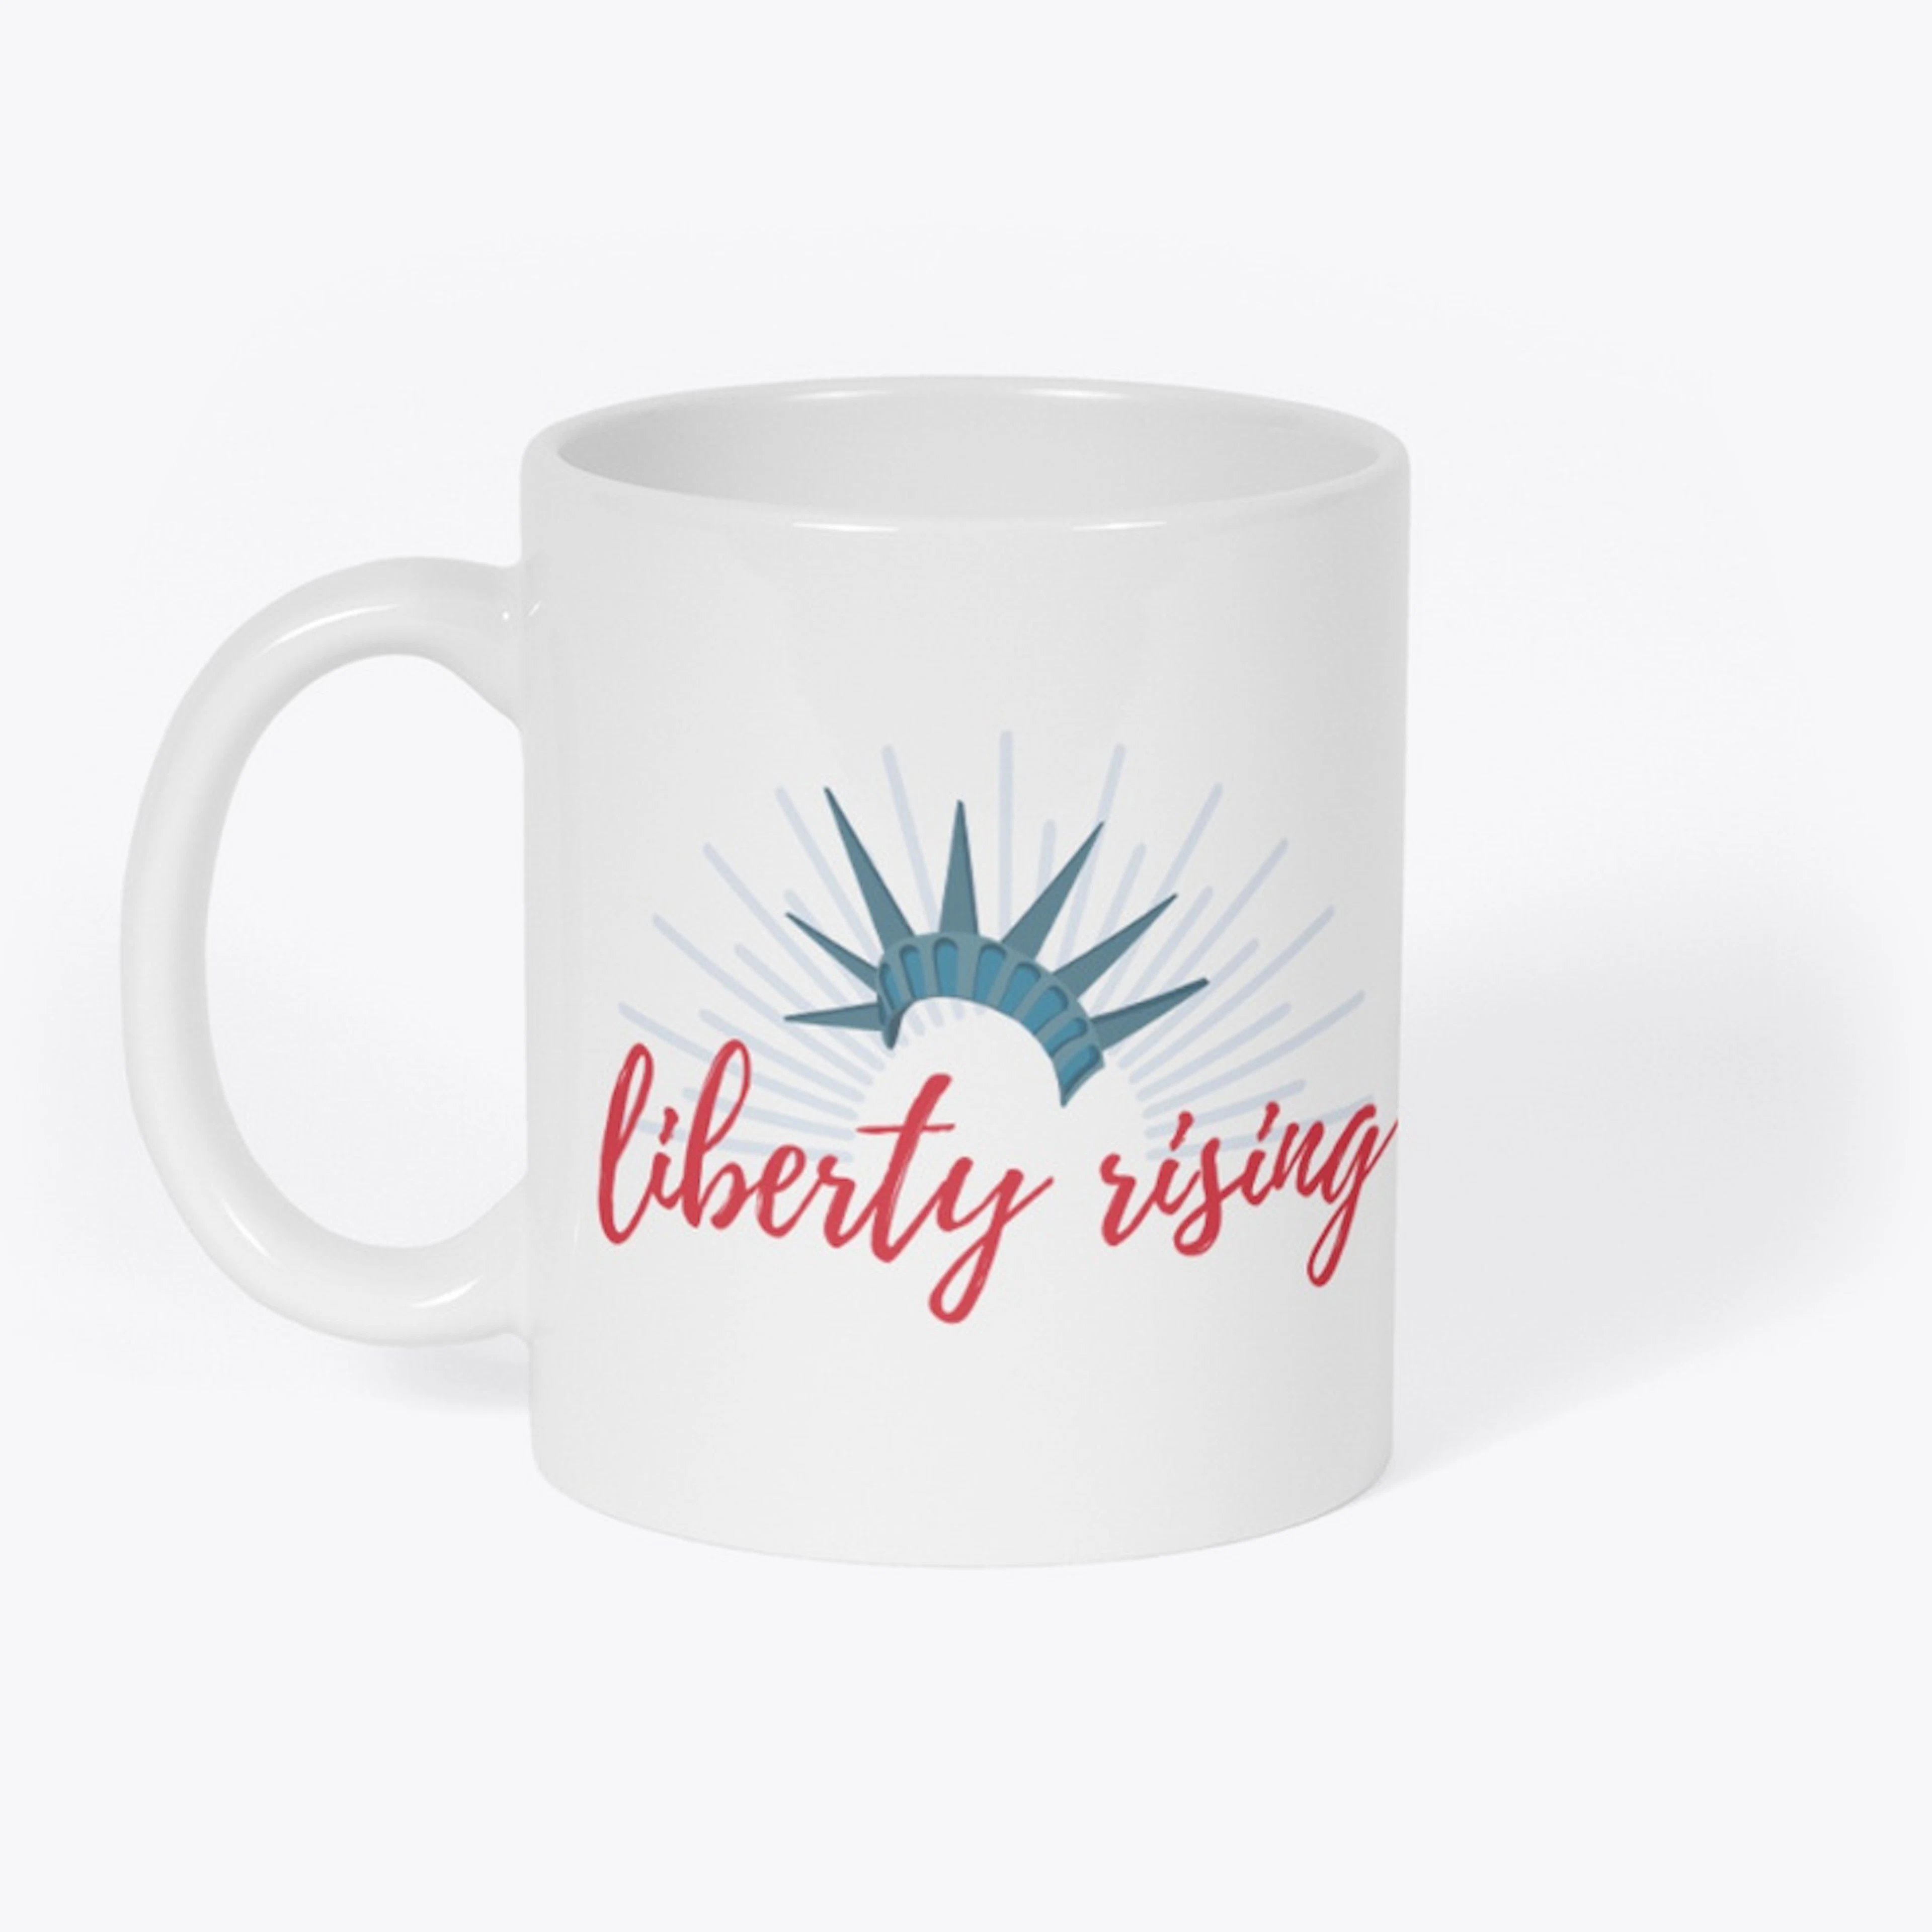 Liberty Rising on White